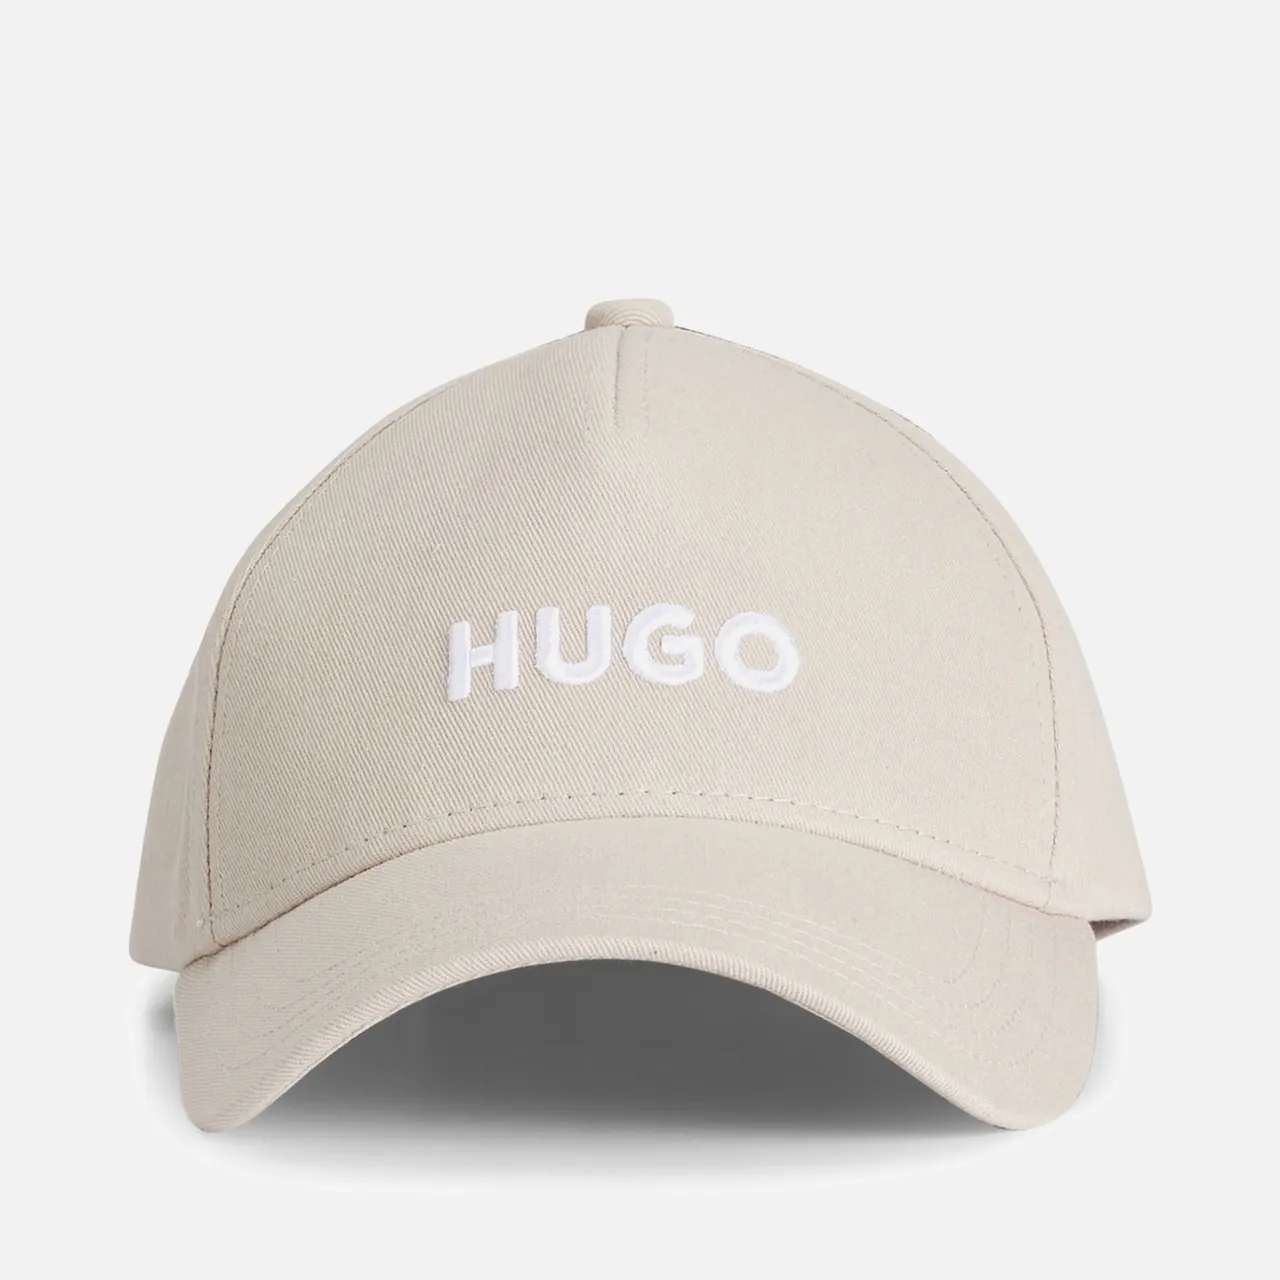 HUGO Jude Cotton-Twill Cap